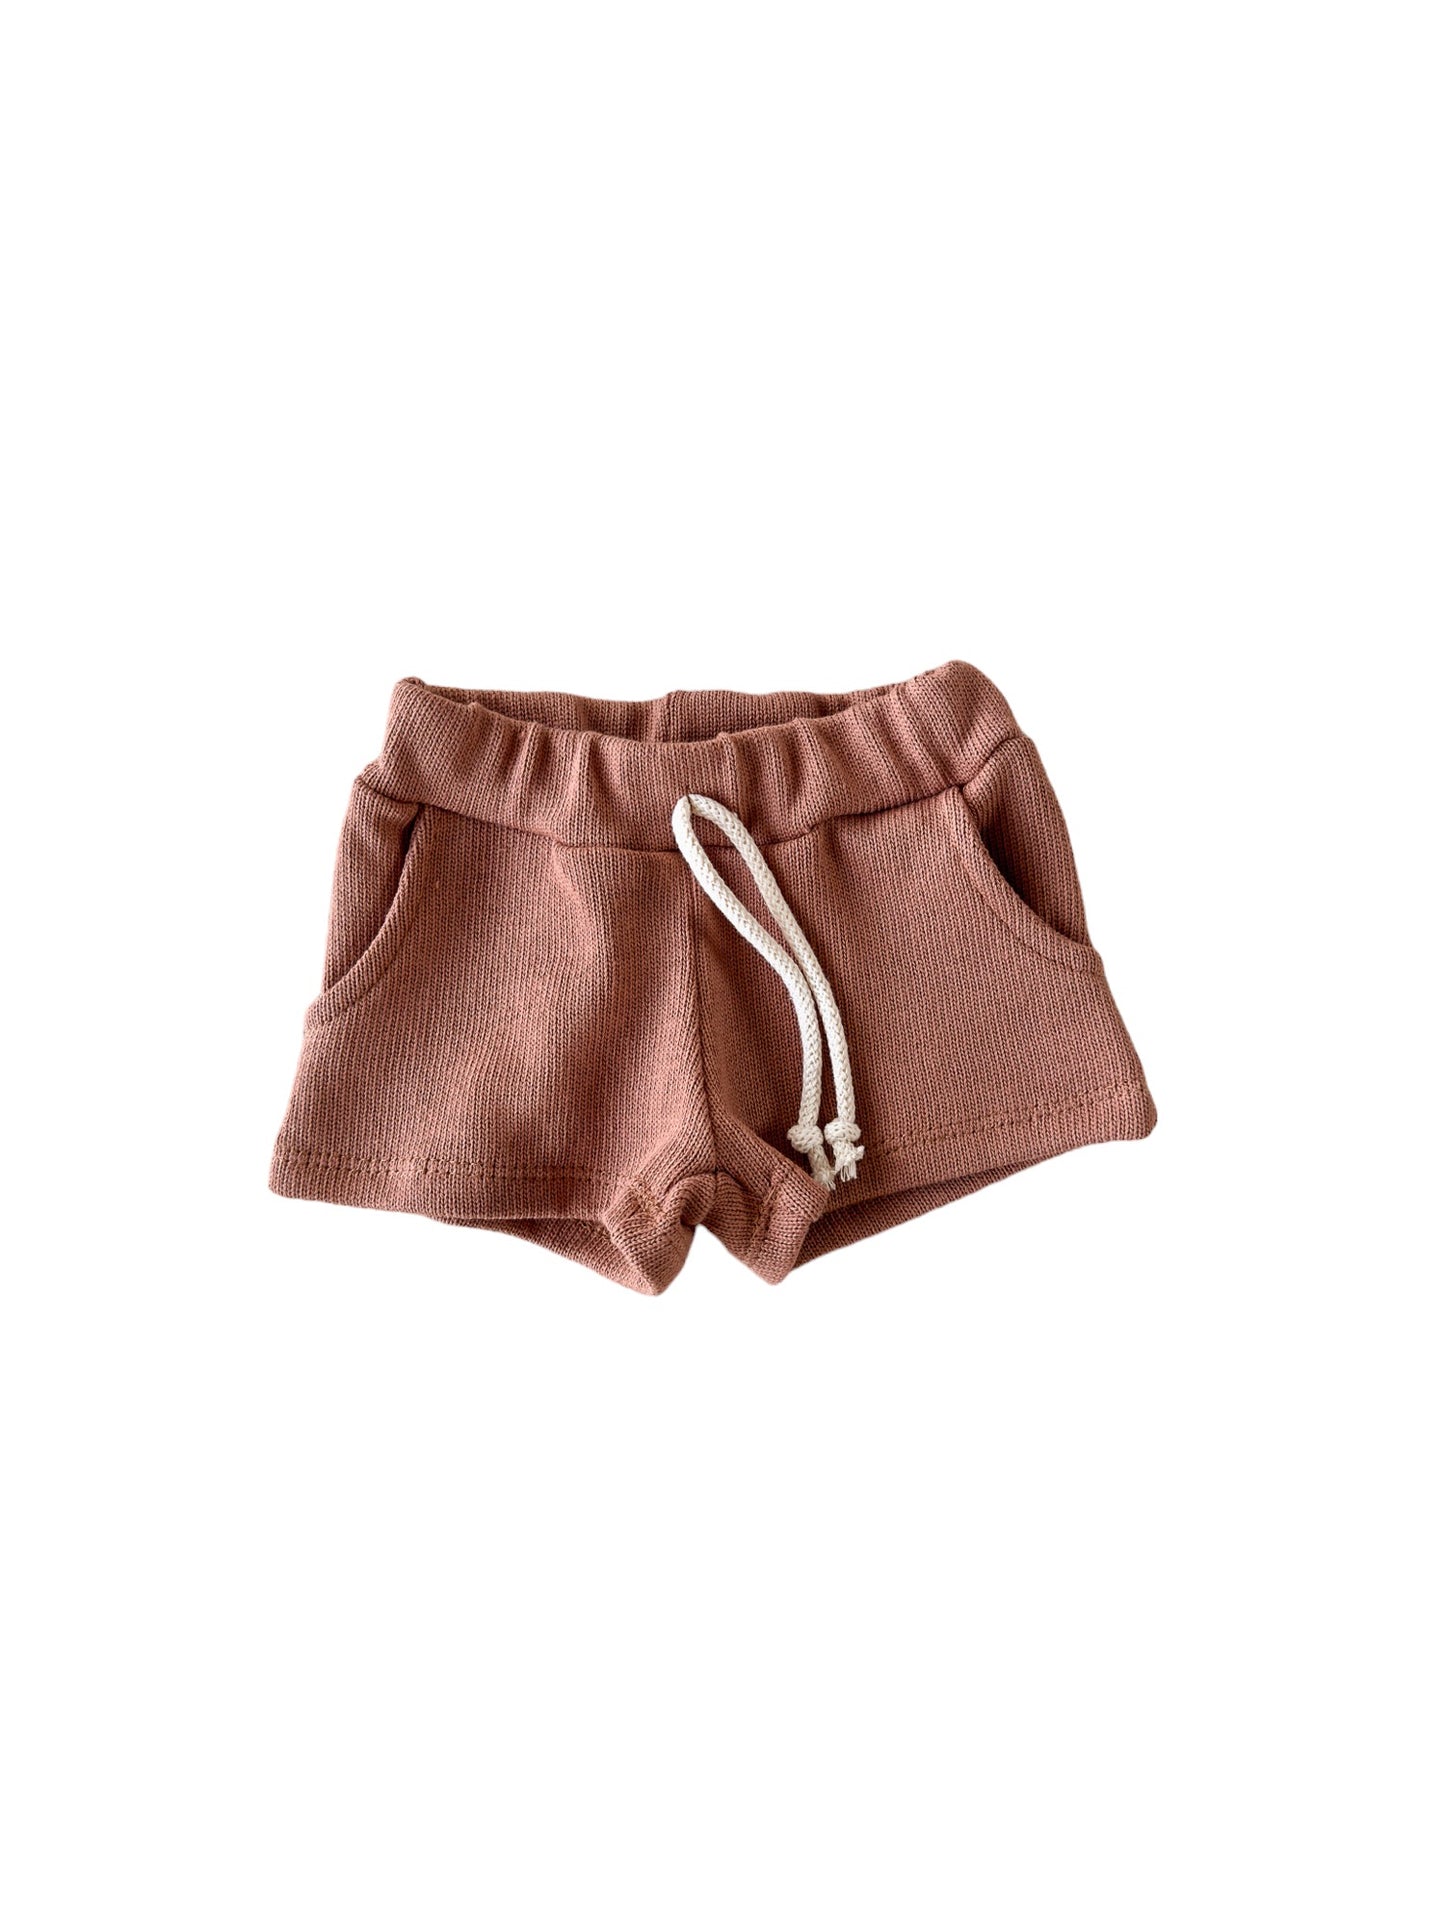 Knit shorts / clay